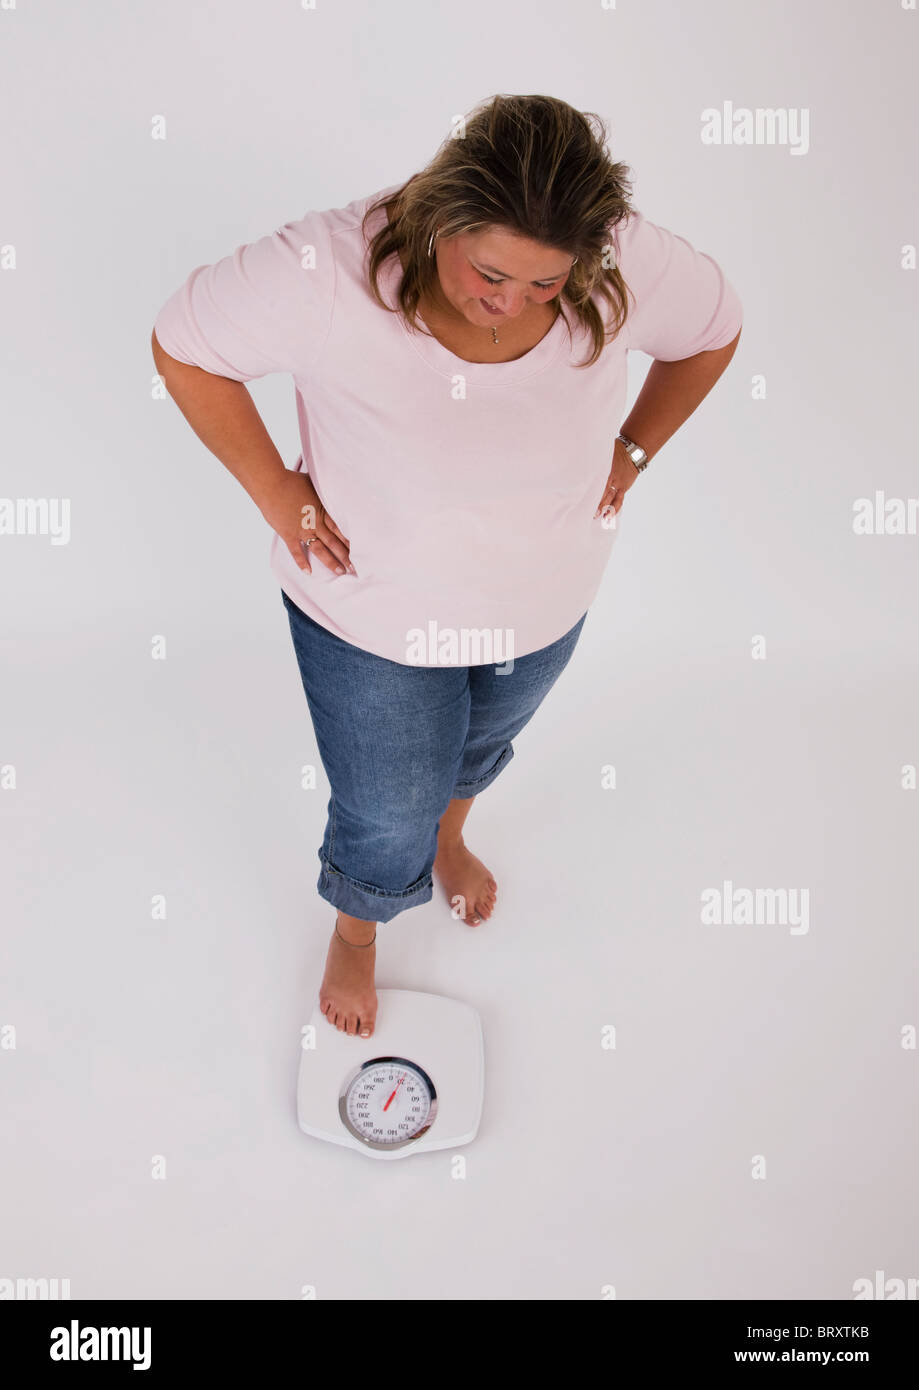 https://c8.alamy.com/comp/BRXTKB/overweight-woman-standing-on-scales-BRXTKB.jpg